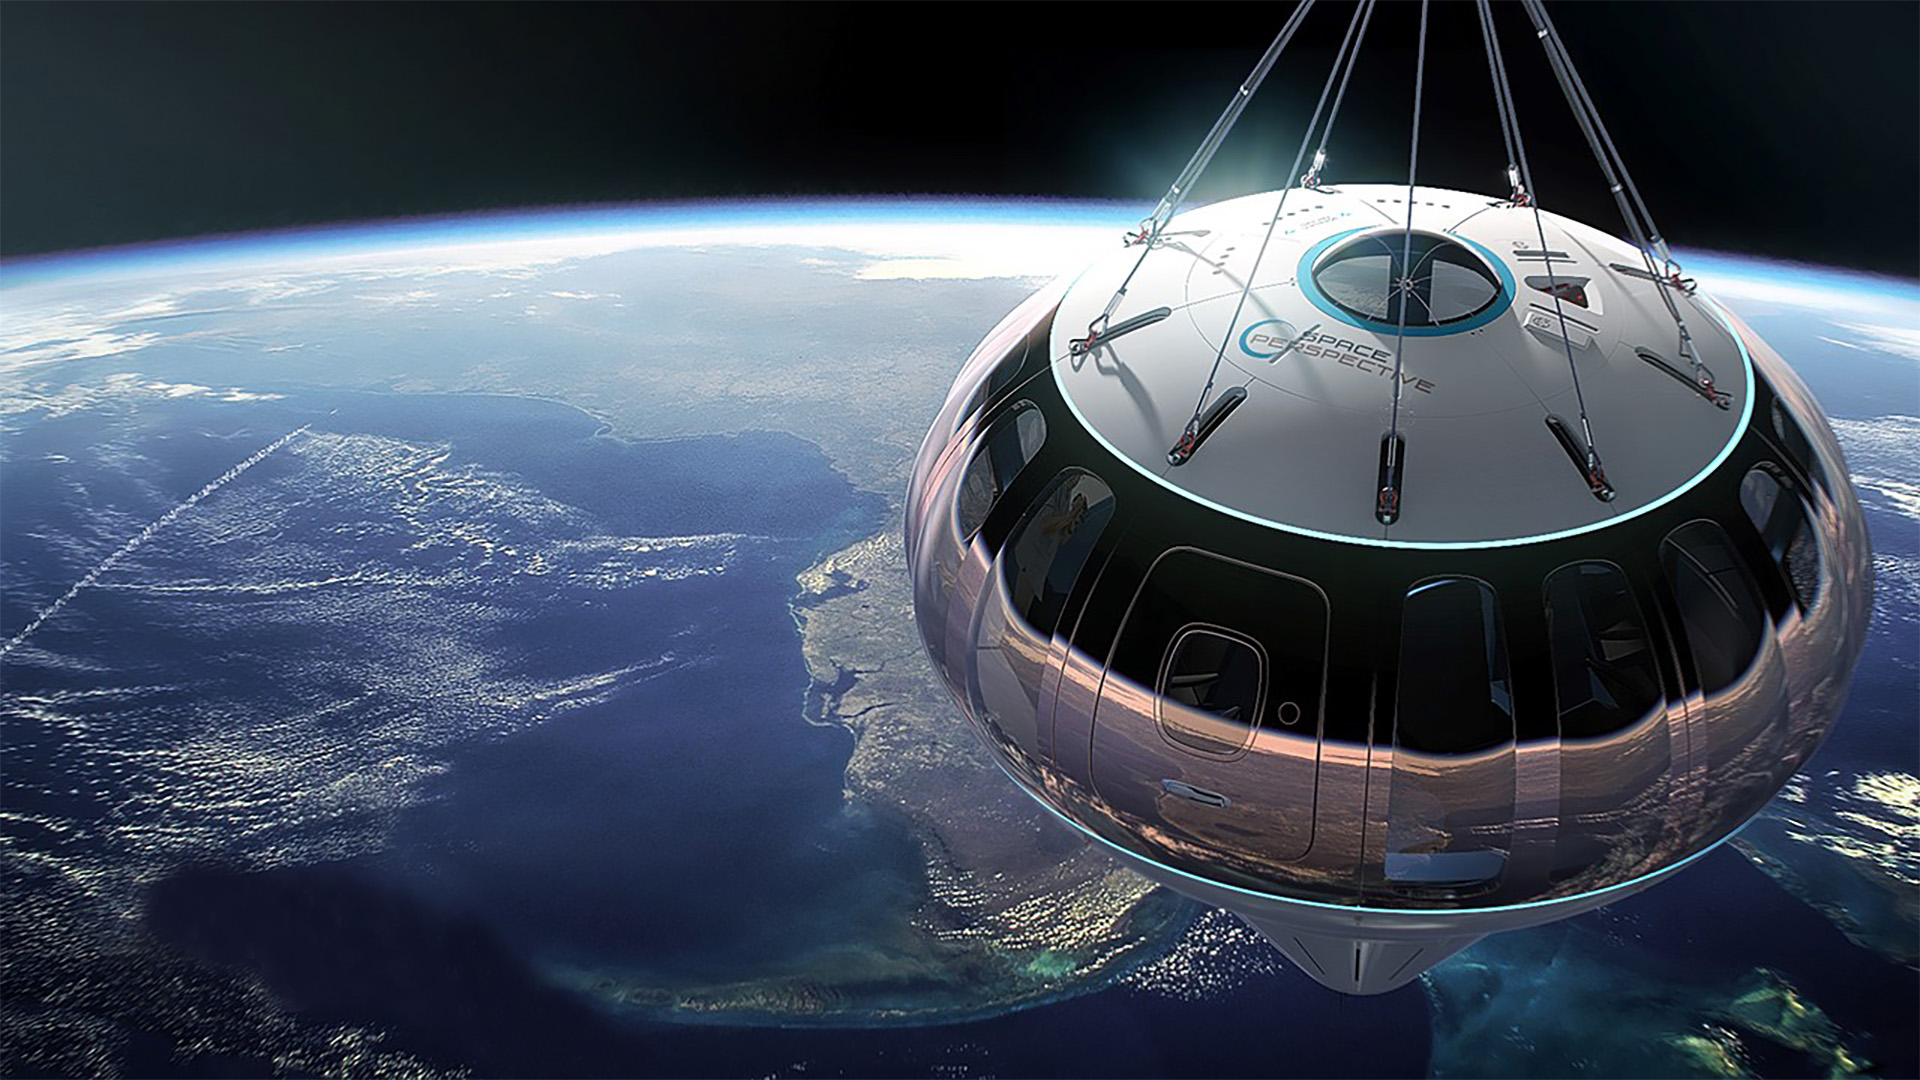 https://www.numerama.com/wp-content/uploads/2020/06/space-perspective-capsule-ballon-stratospherique.jpg